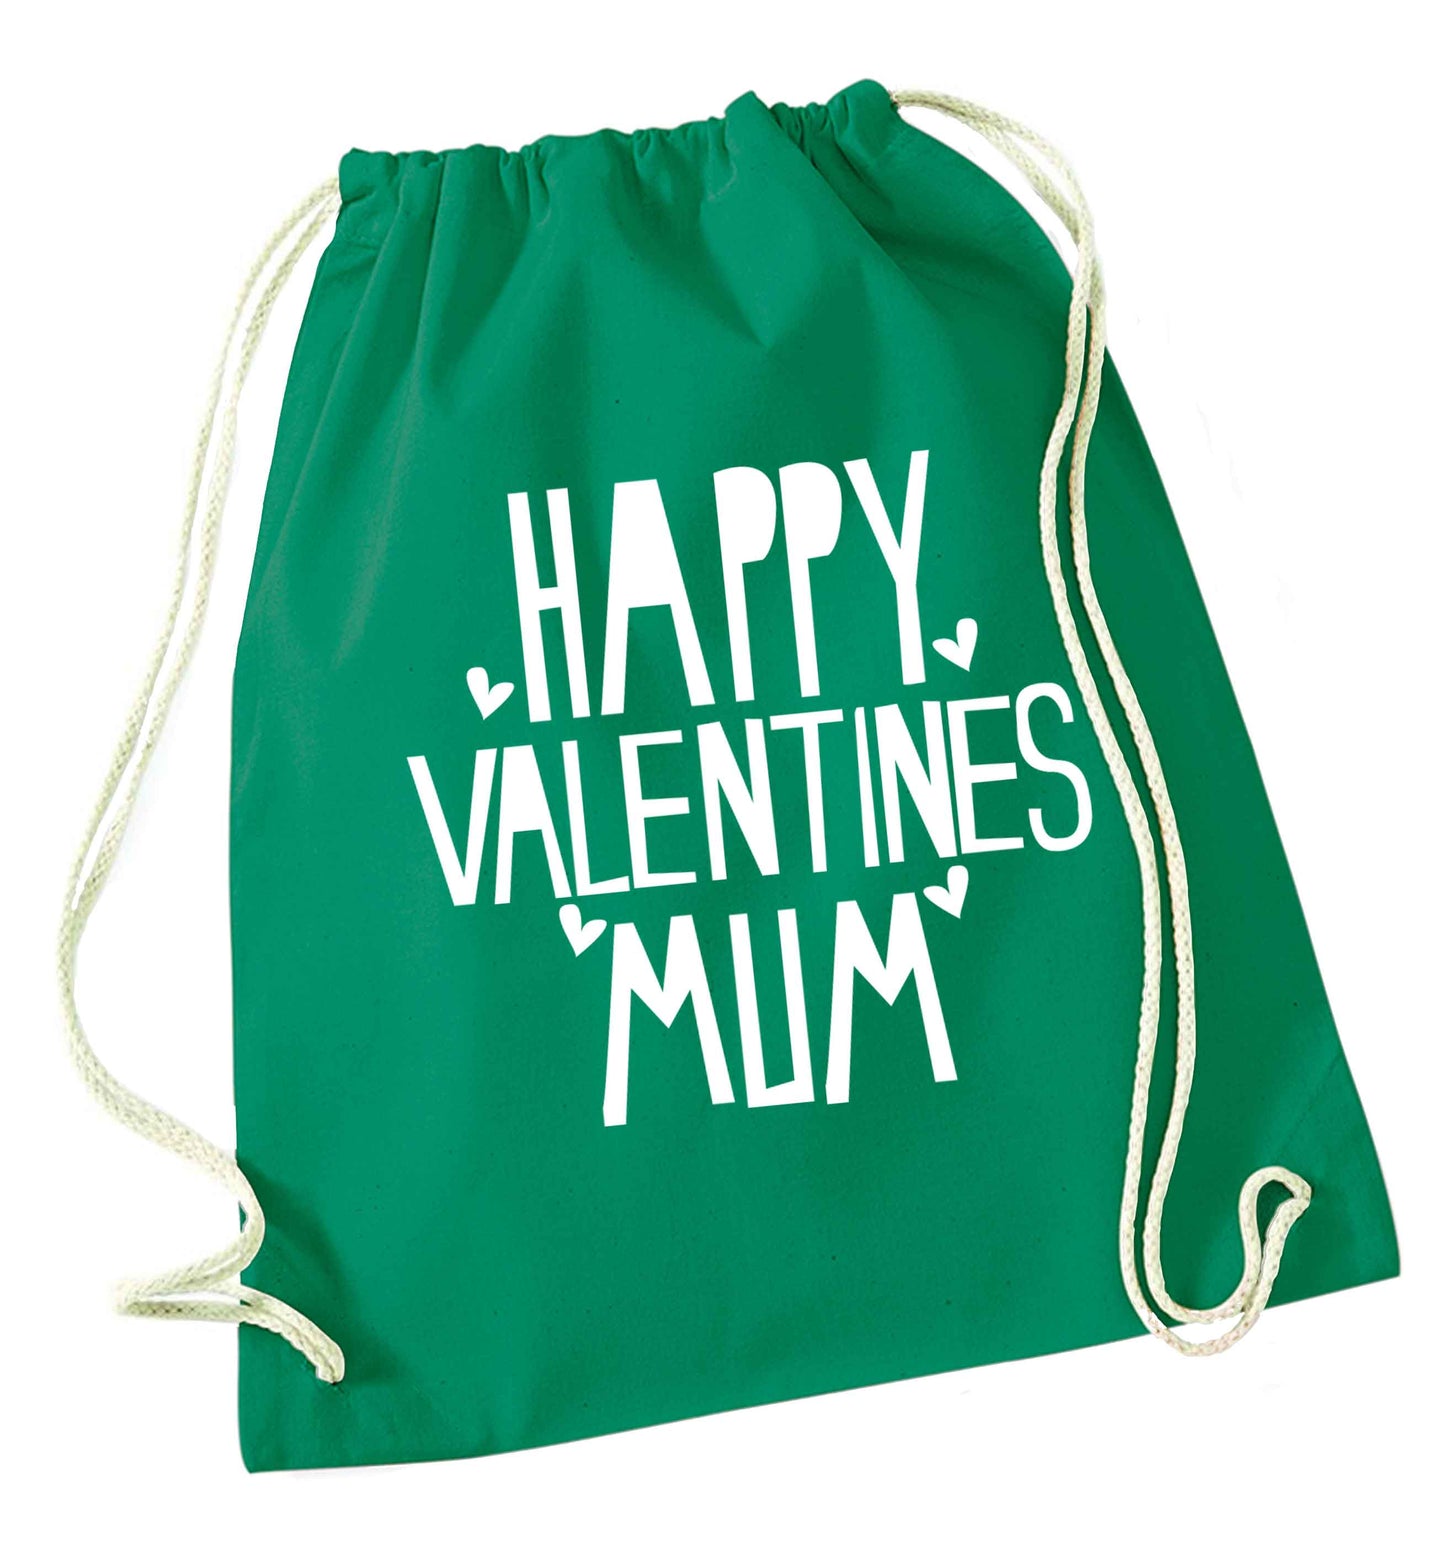 Happy valentines mum green drawstring bag